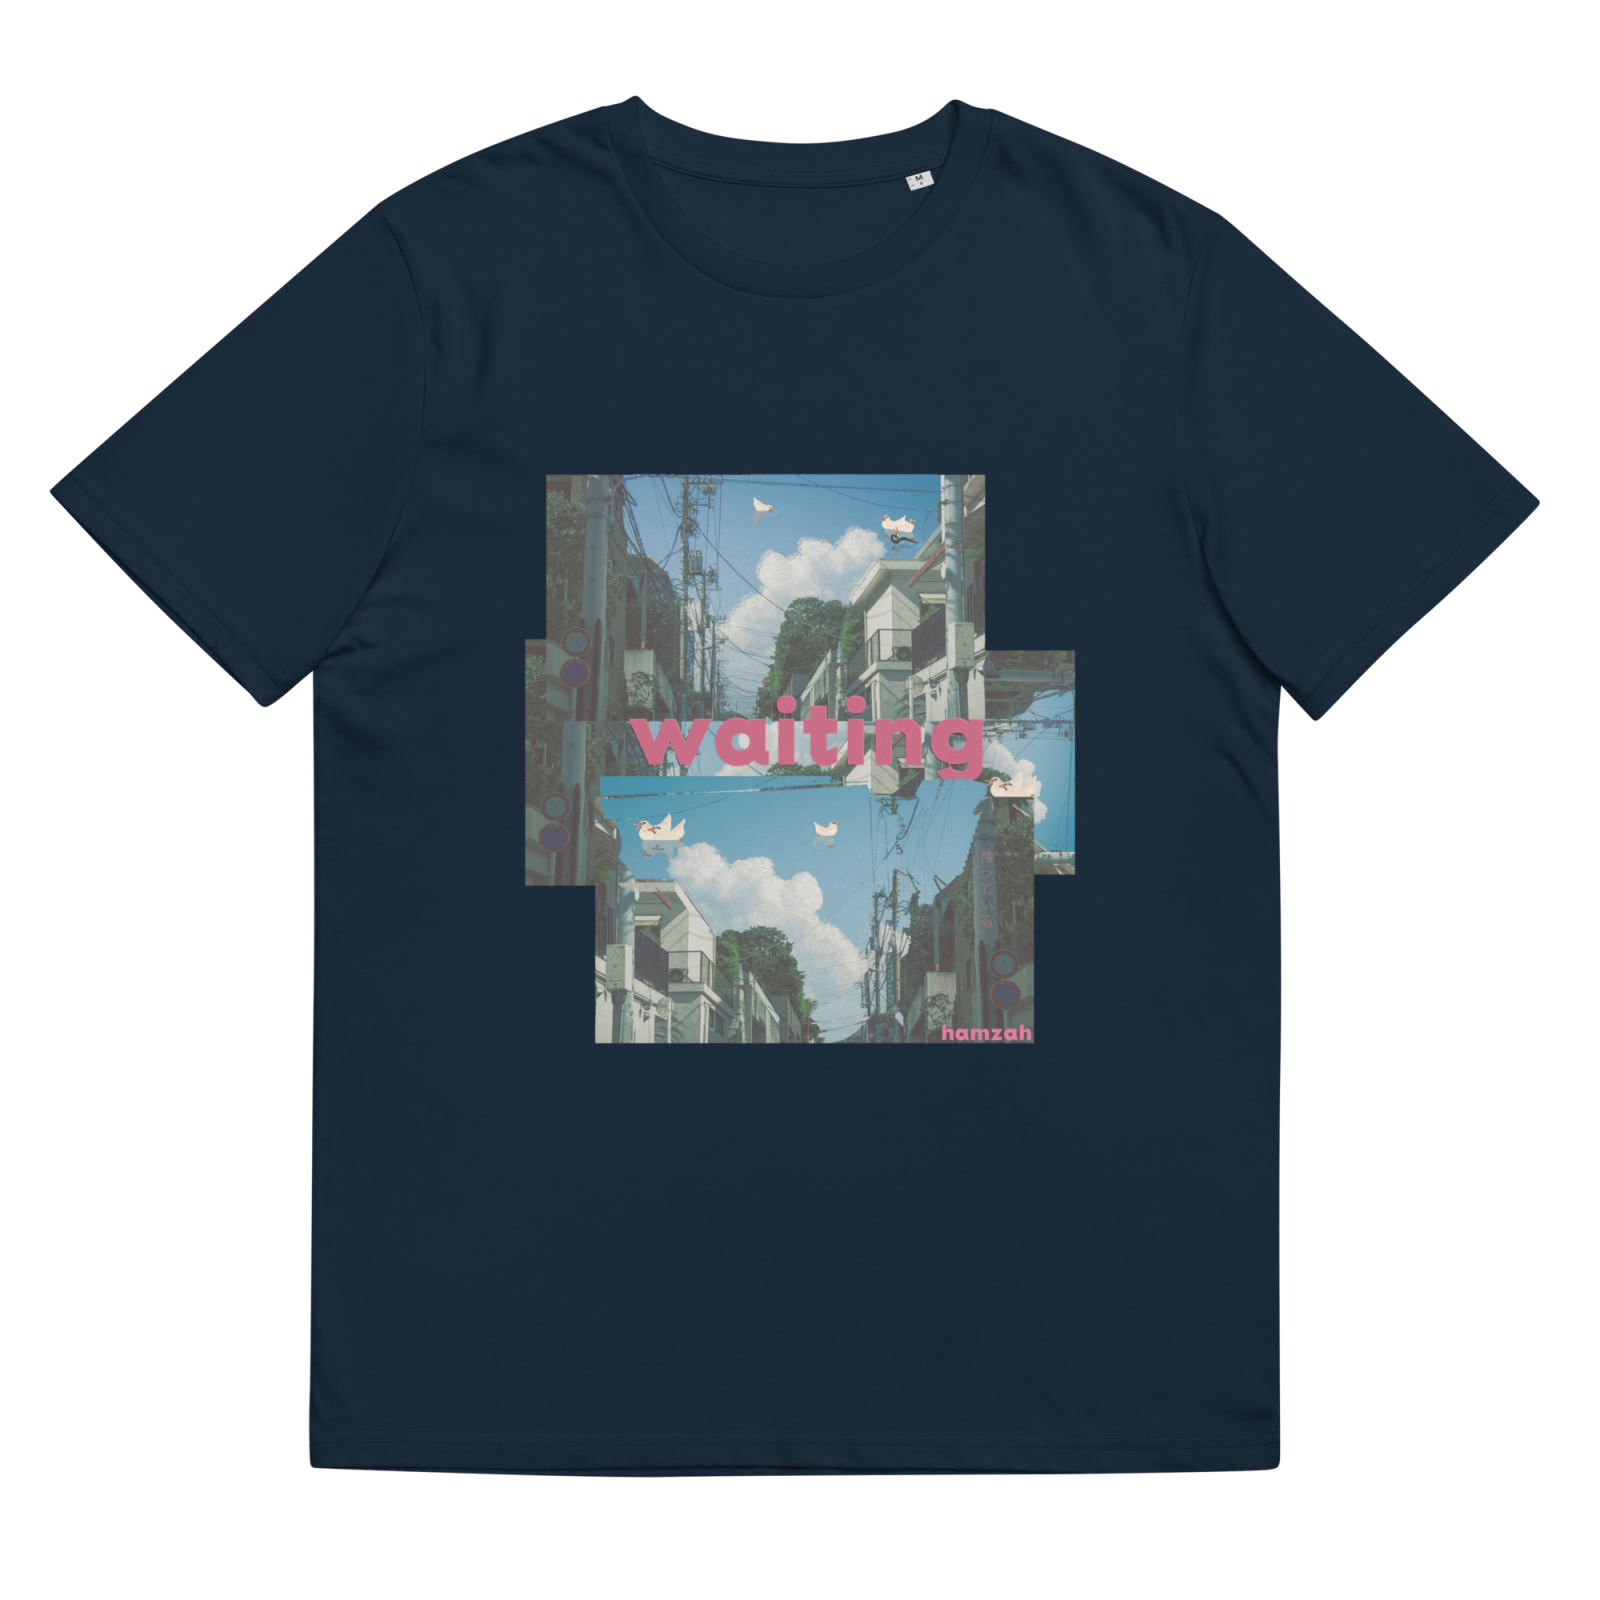 unisex-organic-cotton-t-shirt-french-navy-front-659cbf445c2a8